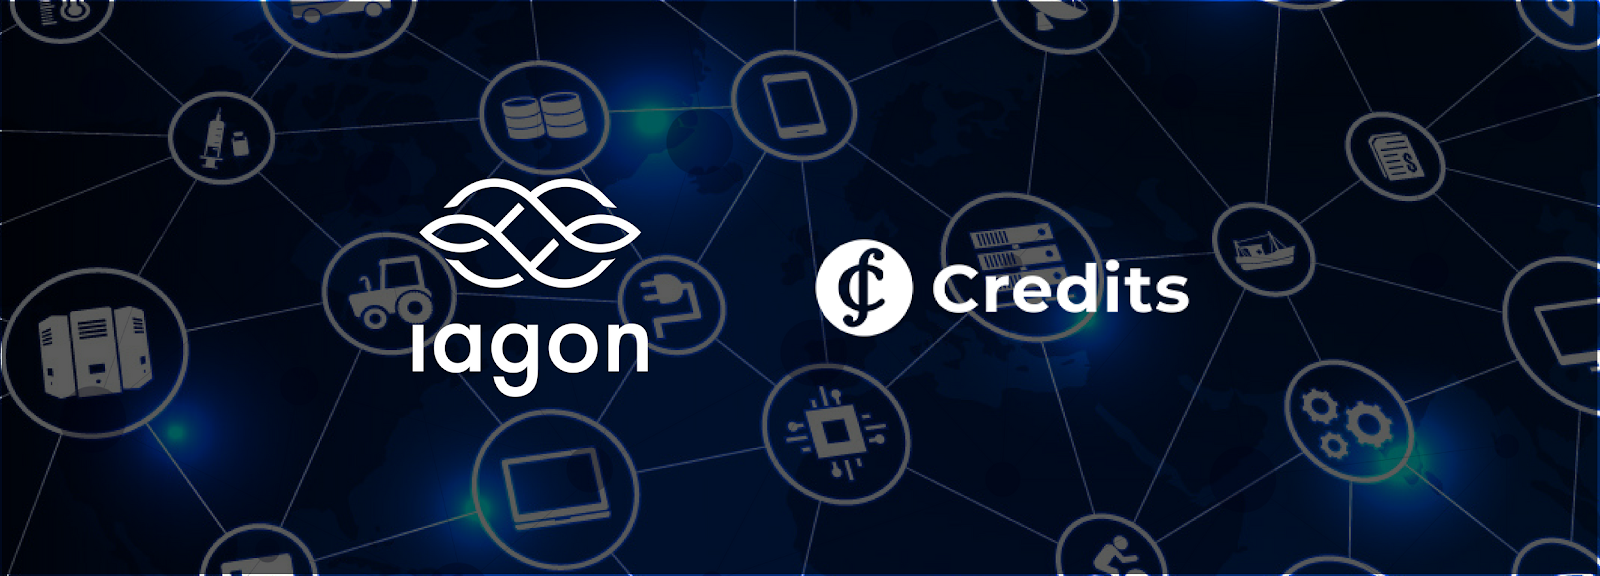 IAGON Partners with Blockchain Platform, CREDITS